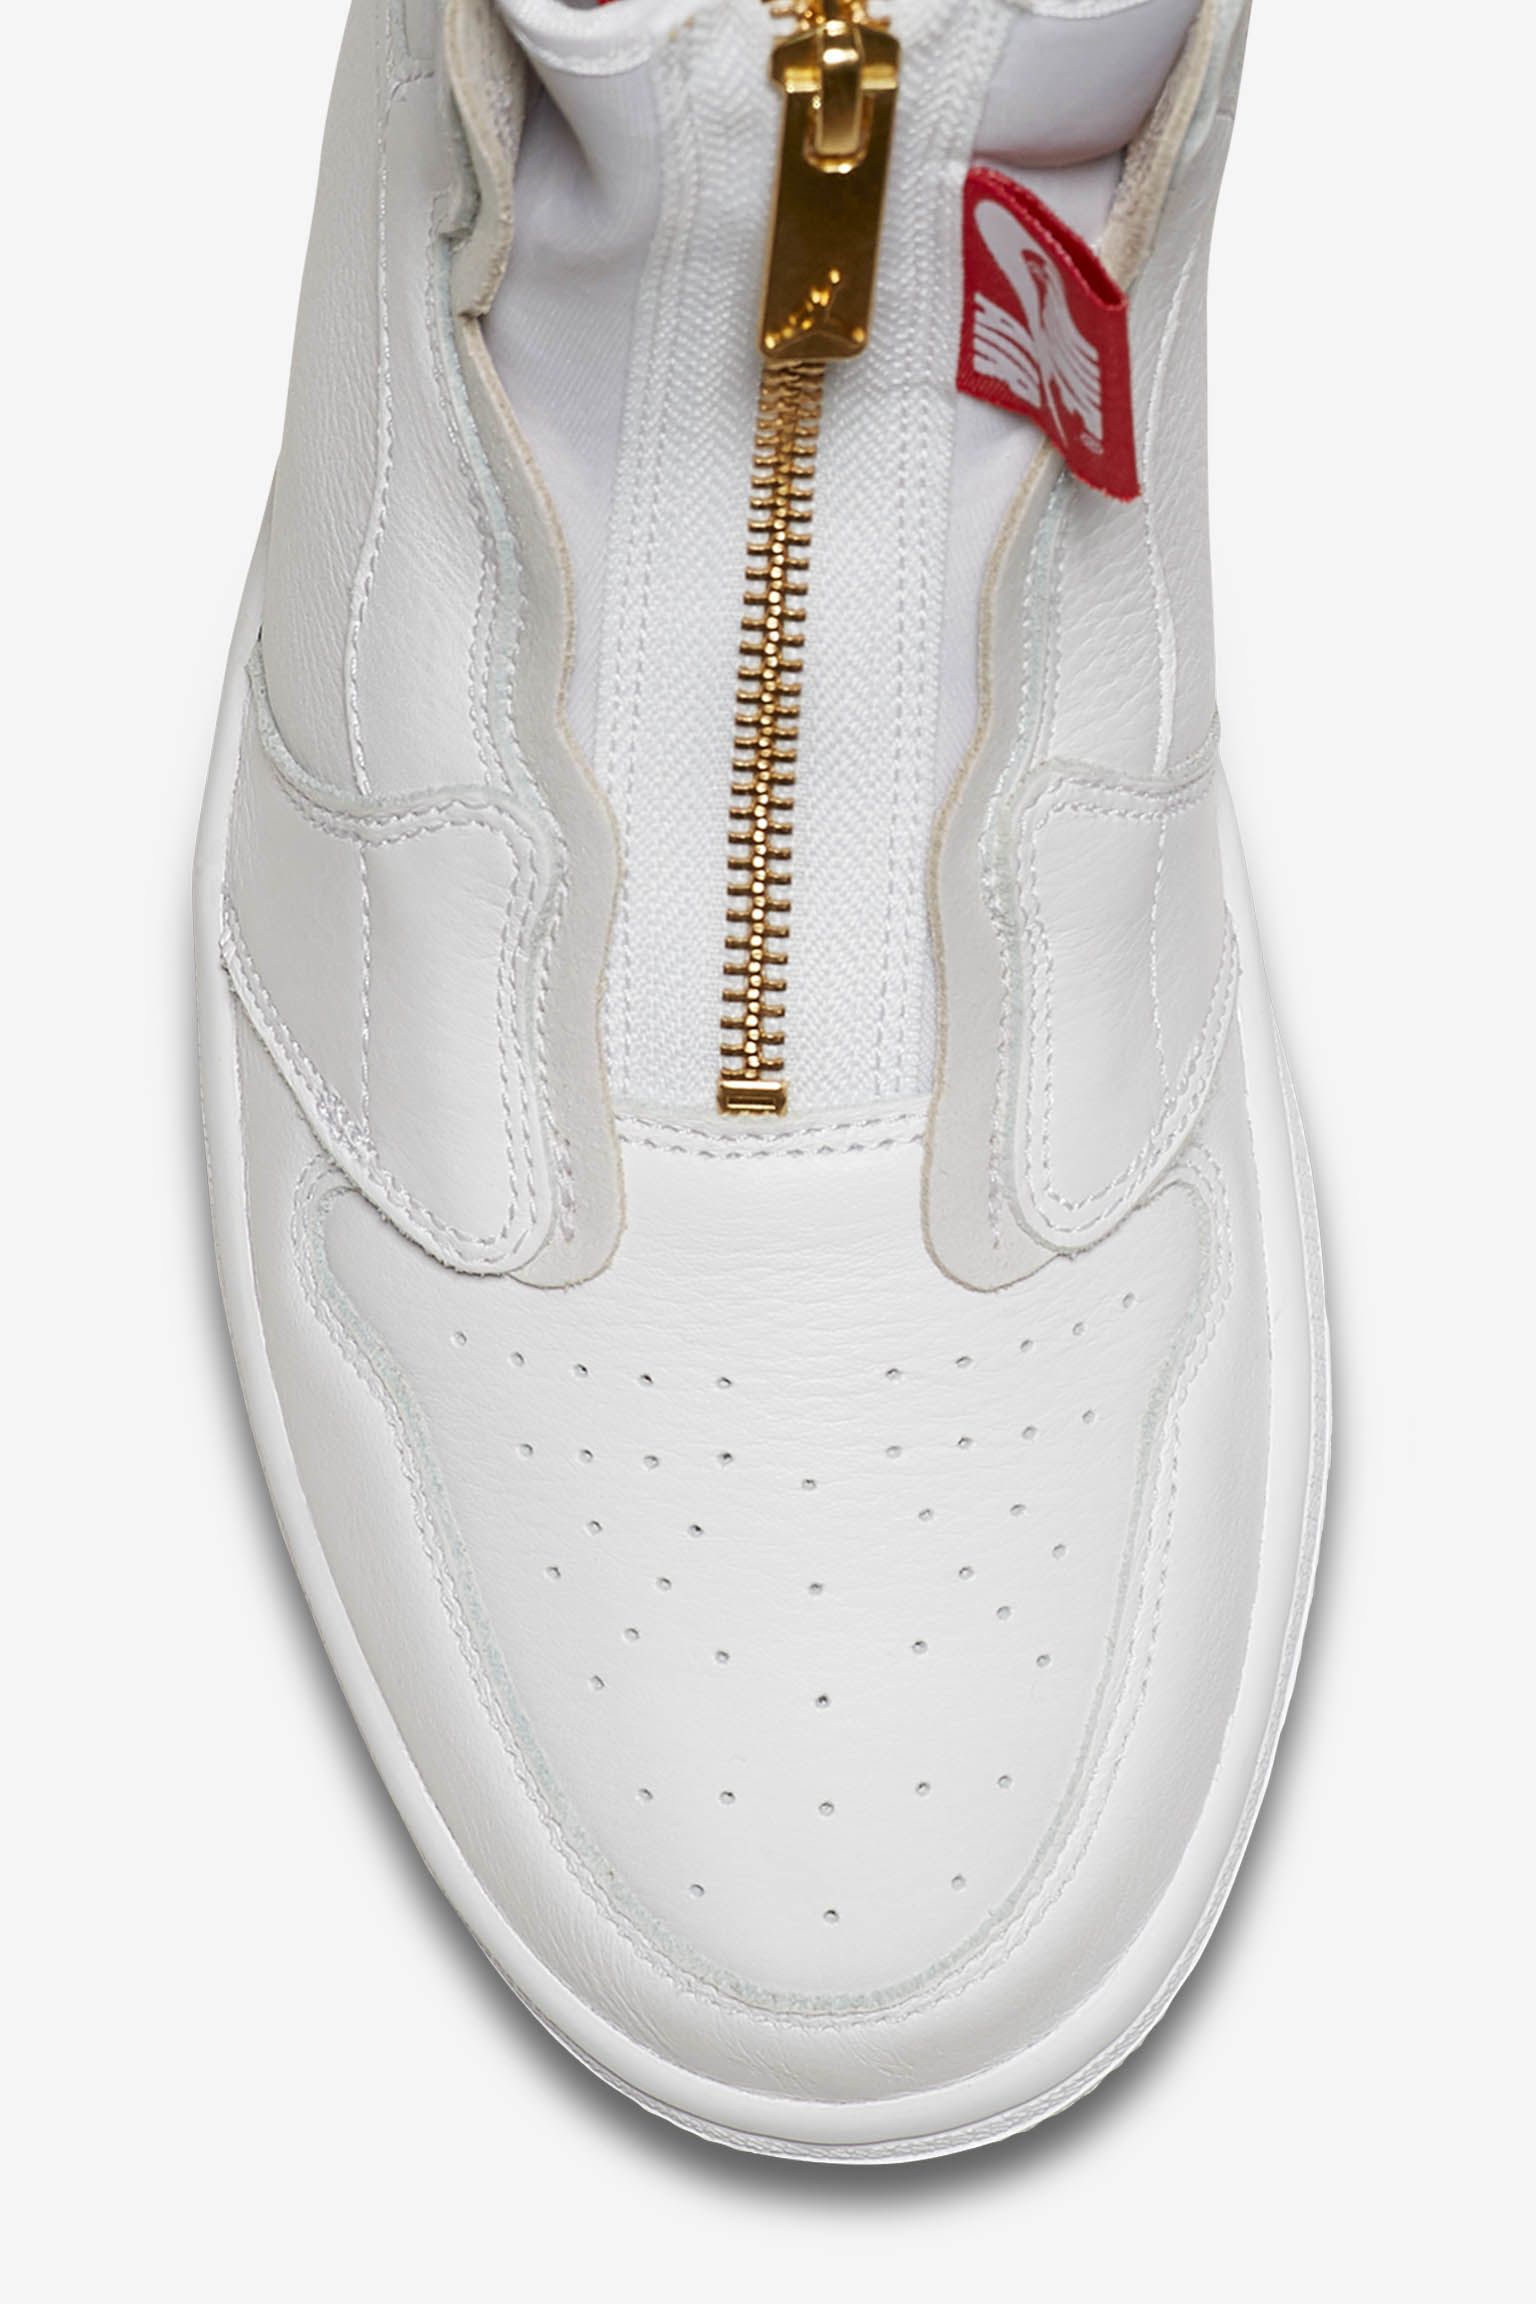 Nike WMNS Air Jordan 1 Retro High Zip